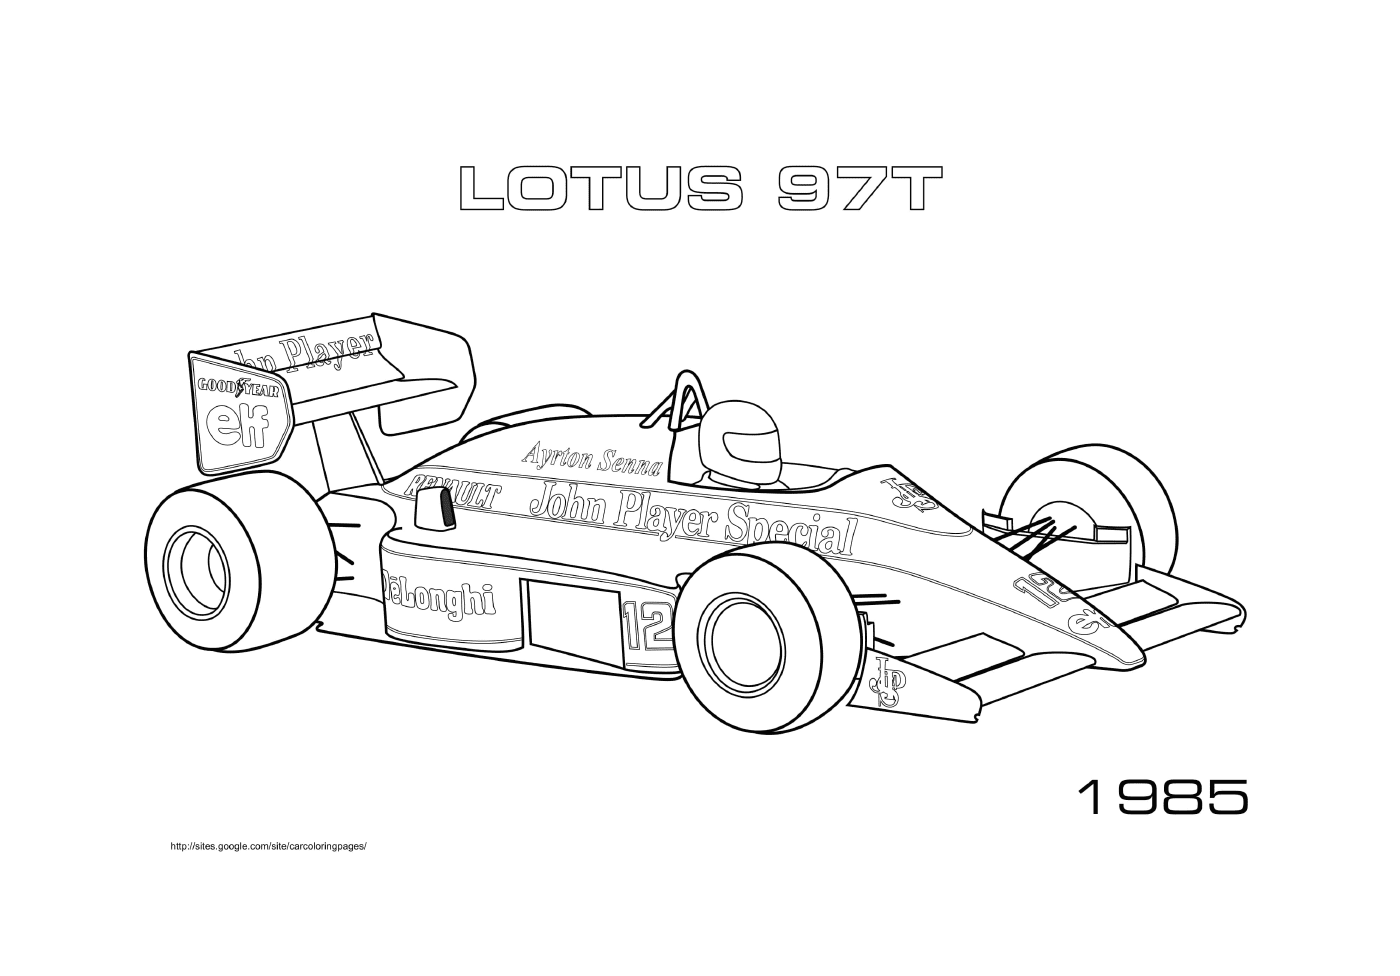  Lotus 97t del 1985 